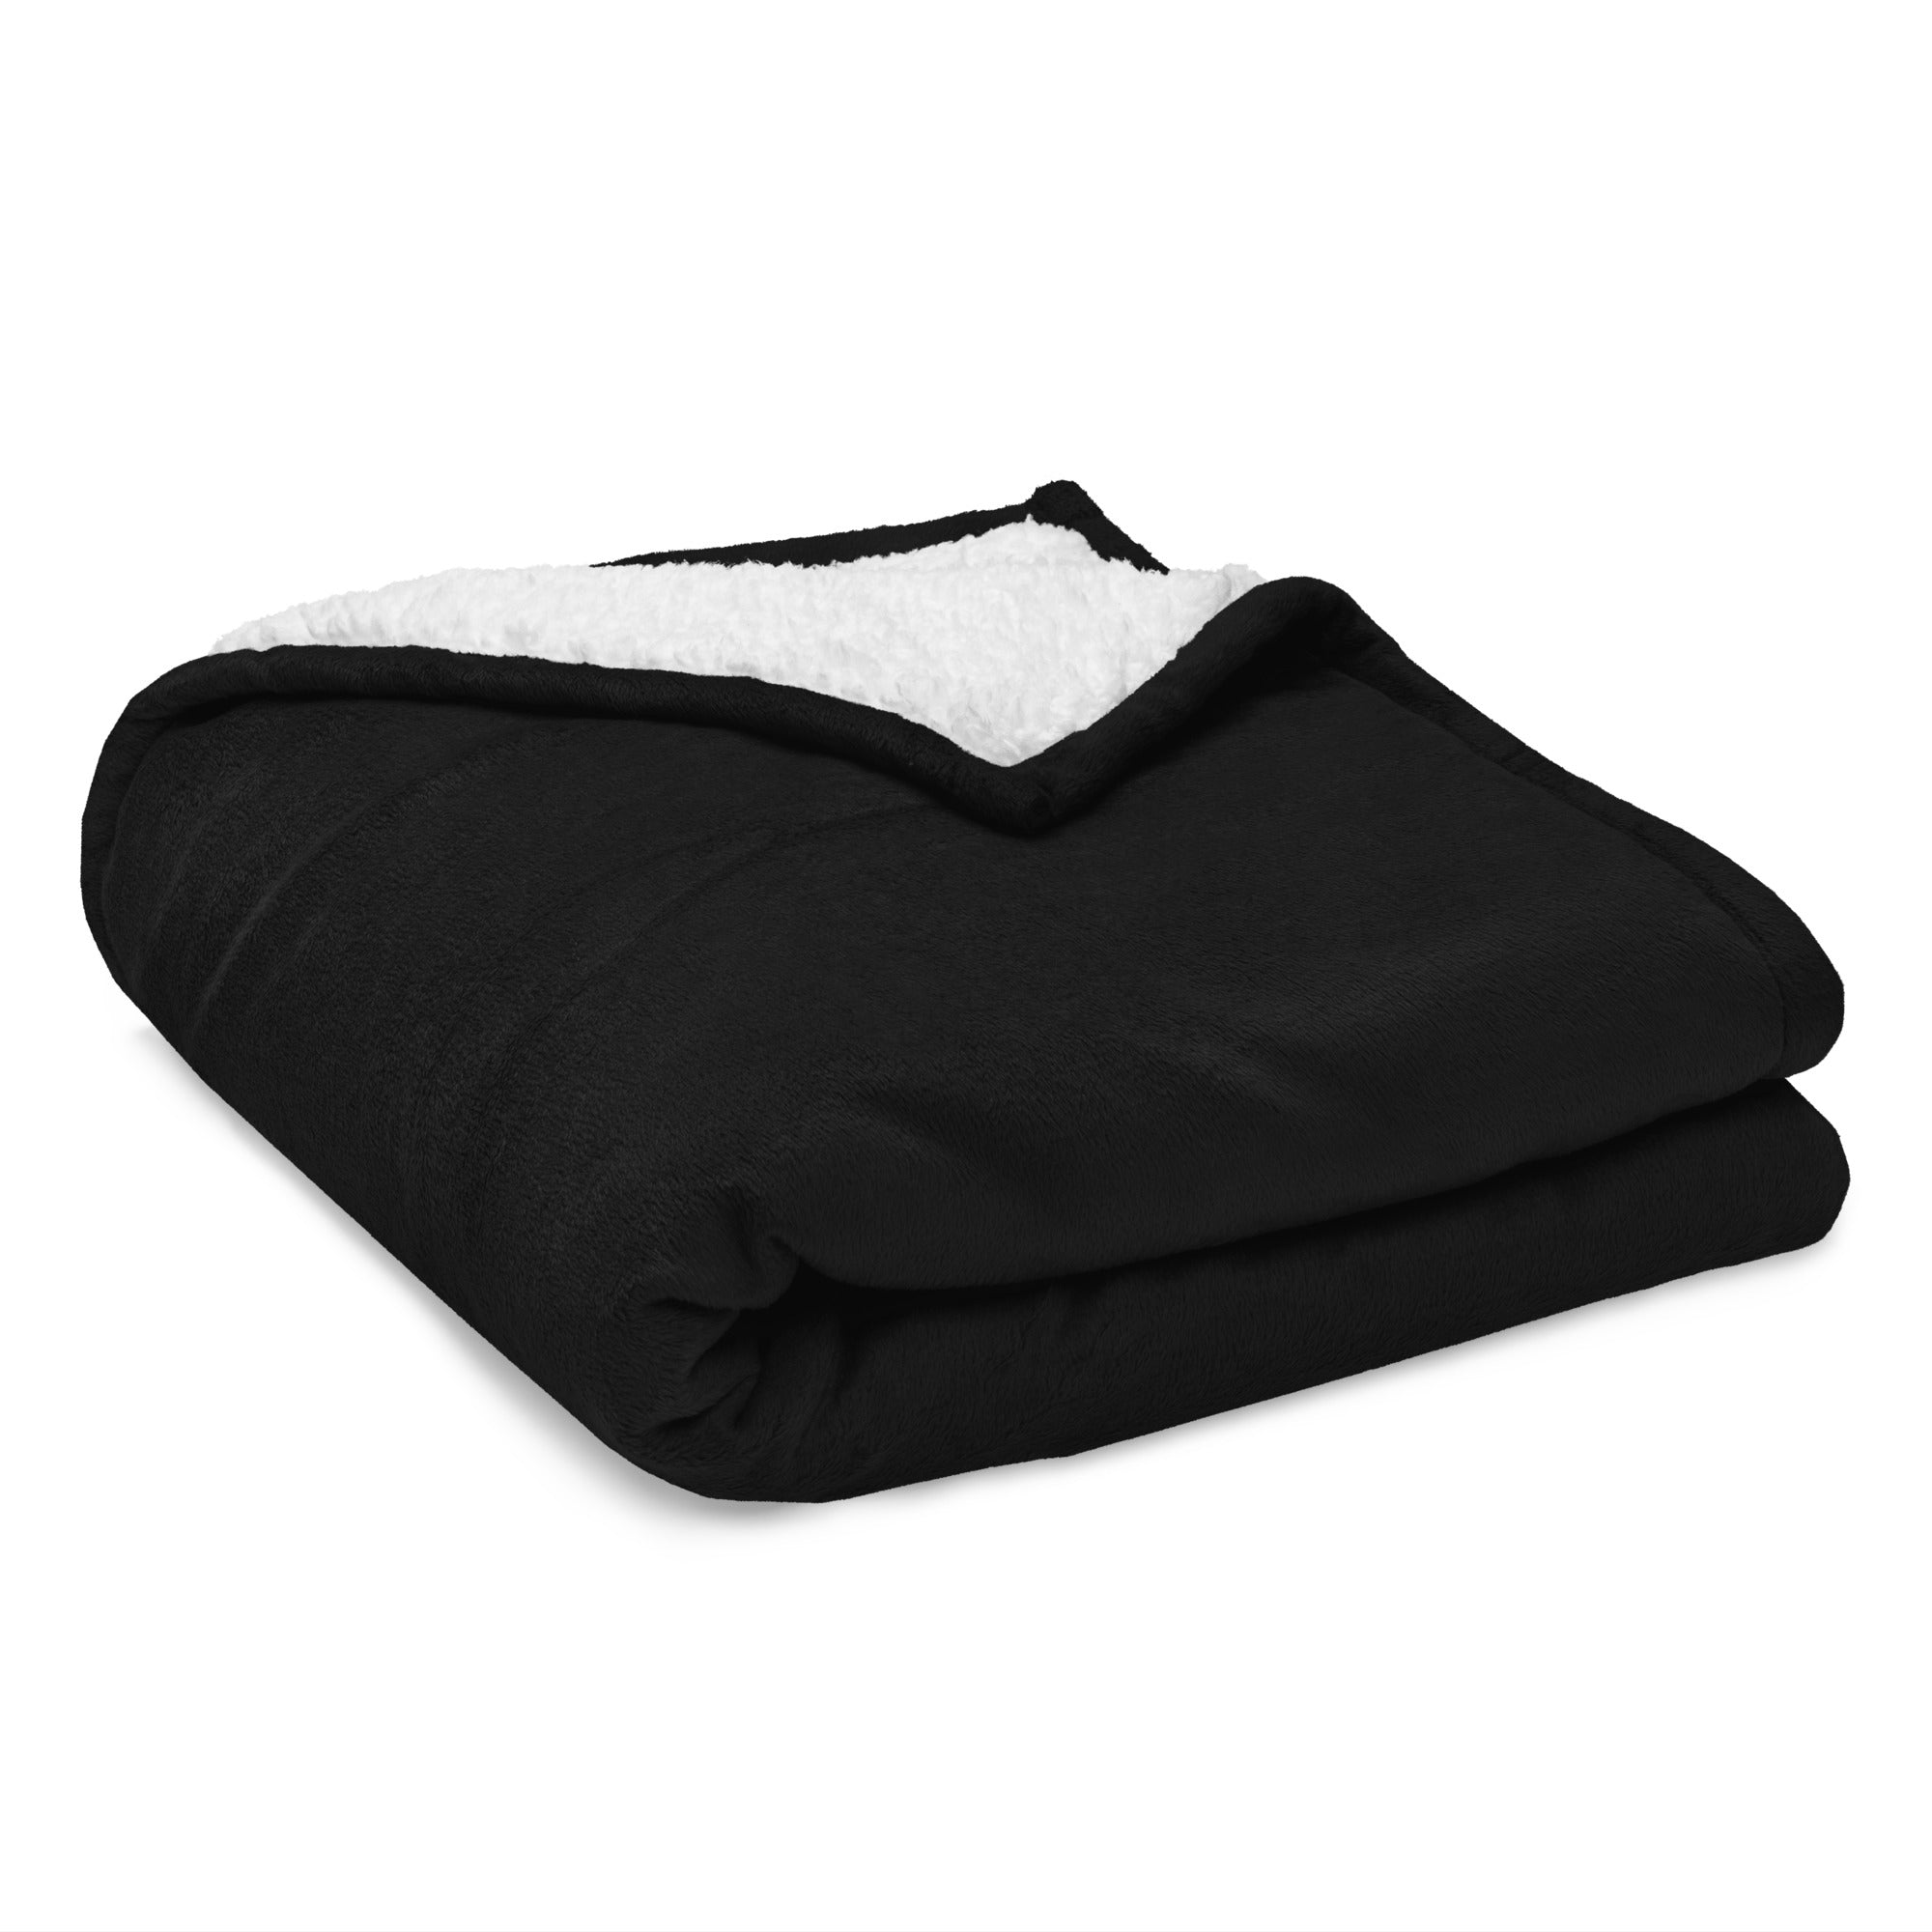 Dragon Foxx™ Premium sherpa blanket - Premium sherpa blanket - DRAGON FOXX™ - Dragon Foxx™ Premium sherpa blanket - 9801917_13444 - Black - 50″×60″ - Sherpa - Fleece Blanket - 50″×60″ blanket - 50″×60″ Sherpa Blanket - Black Premium sherpa blanket